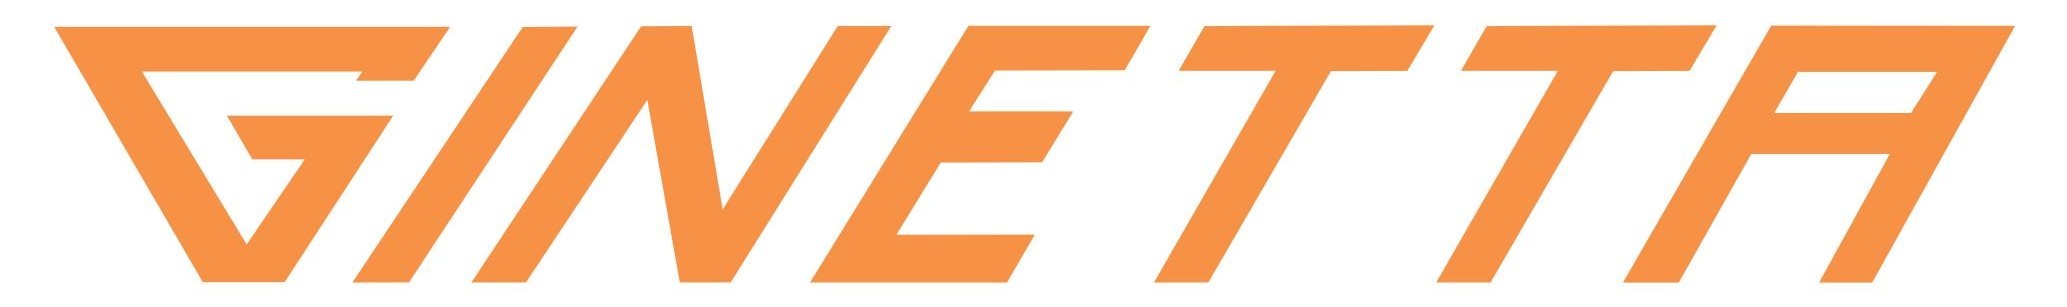 Ginetta Cars Logo [EPS-PDF]